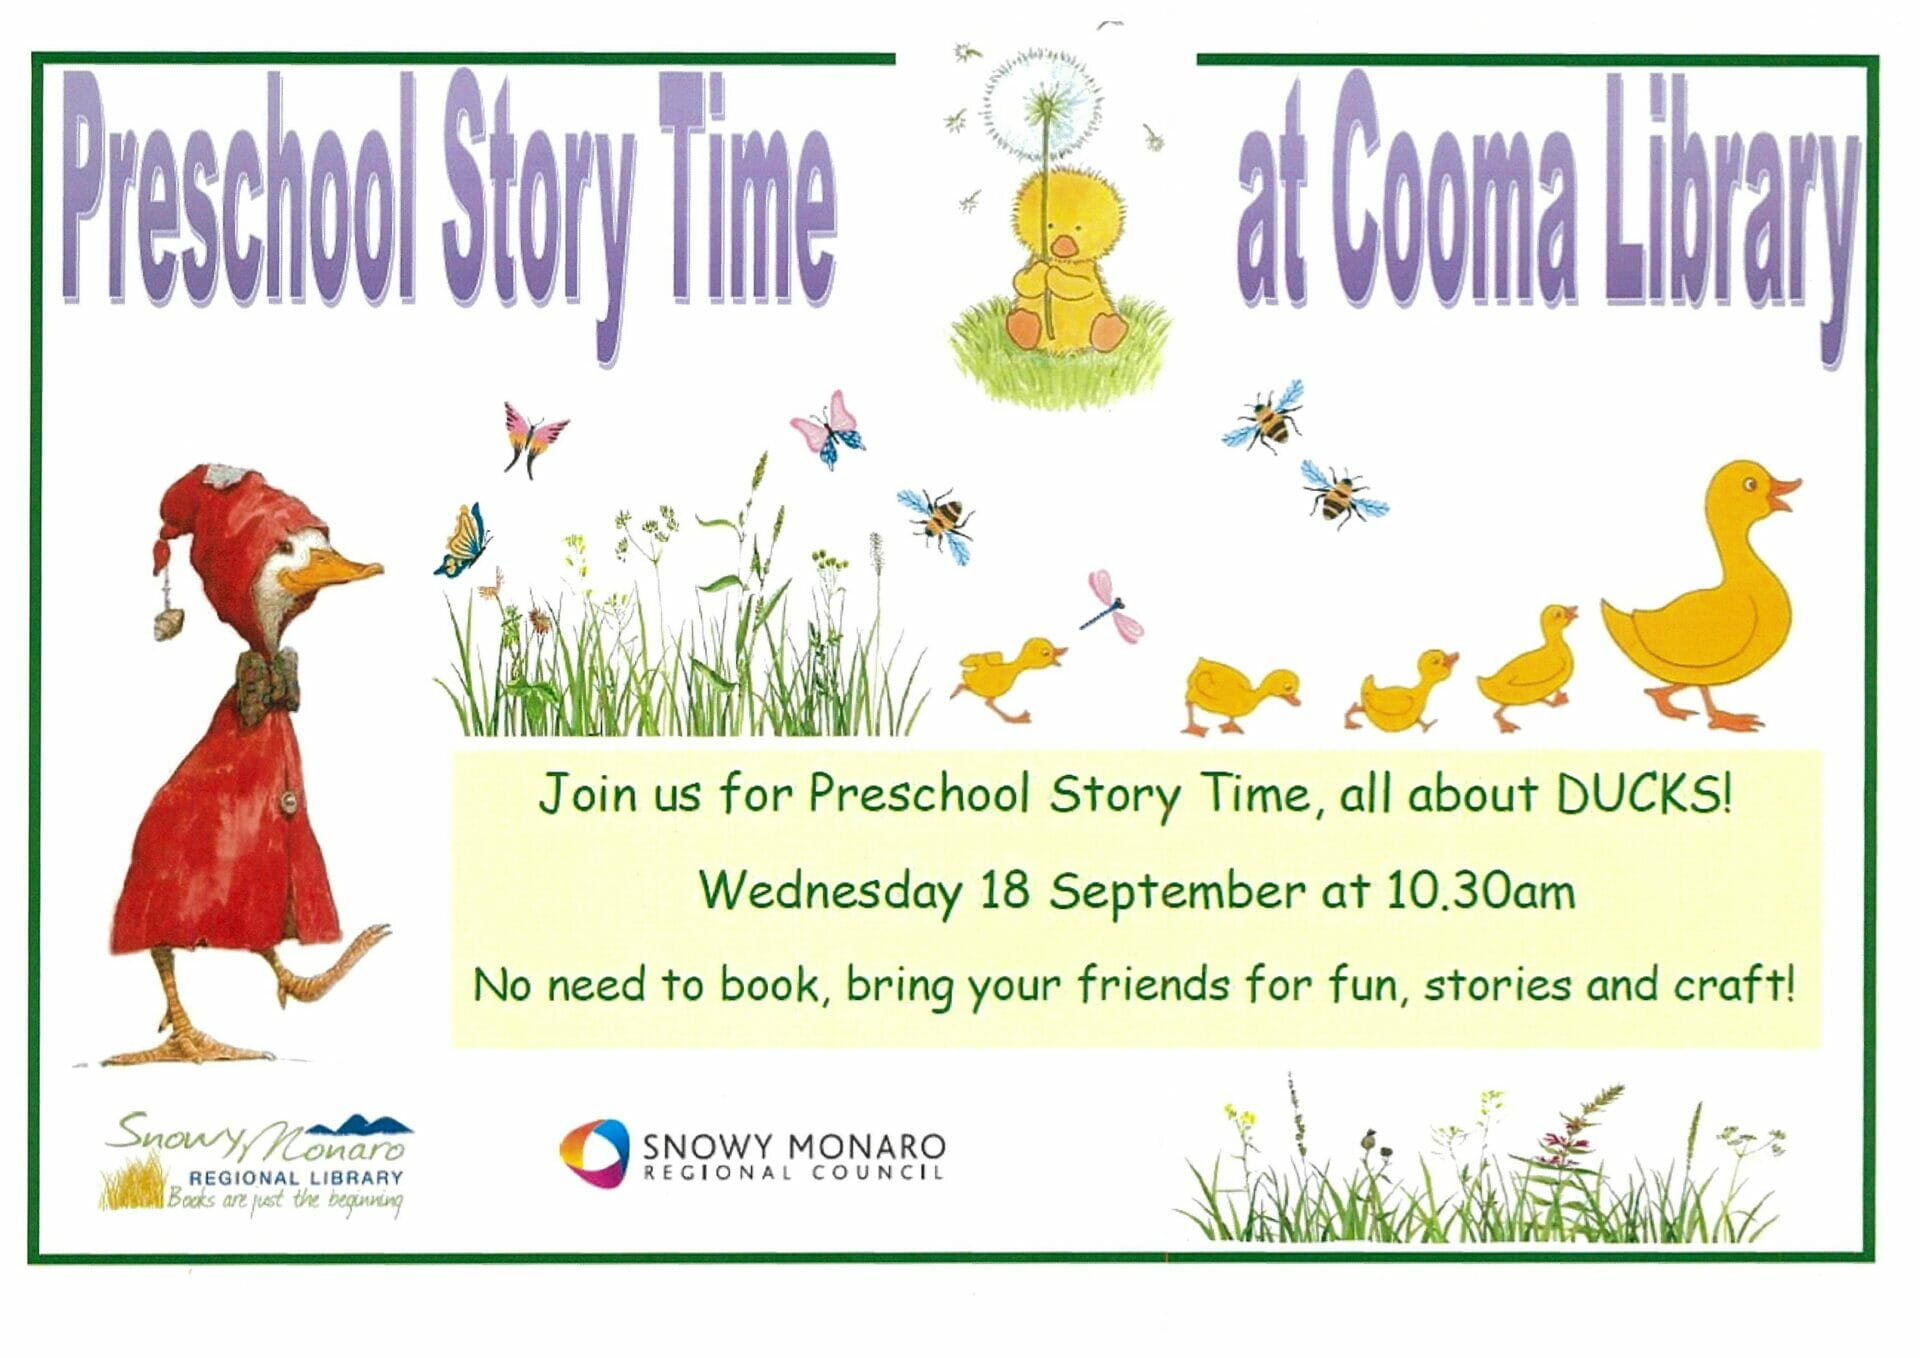 Preschool story time about ducks